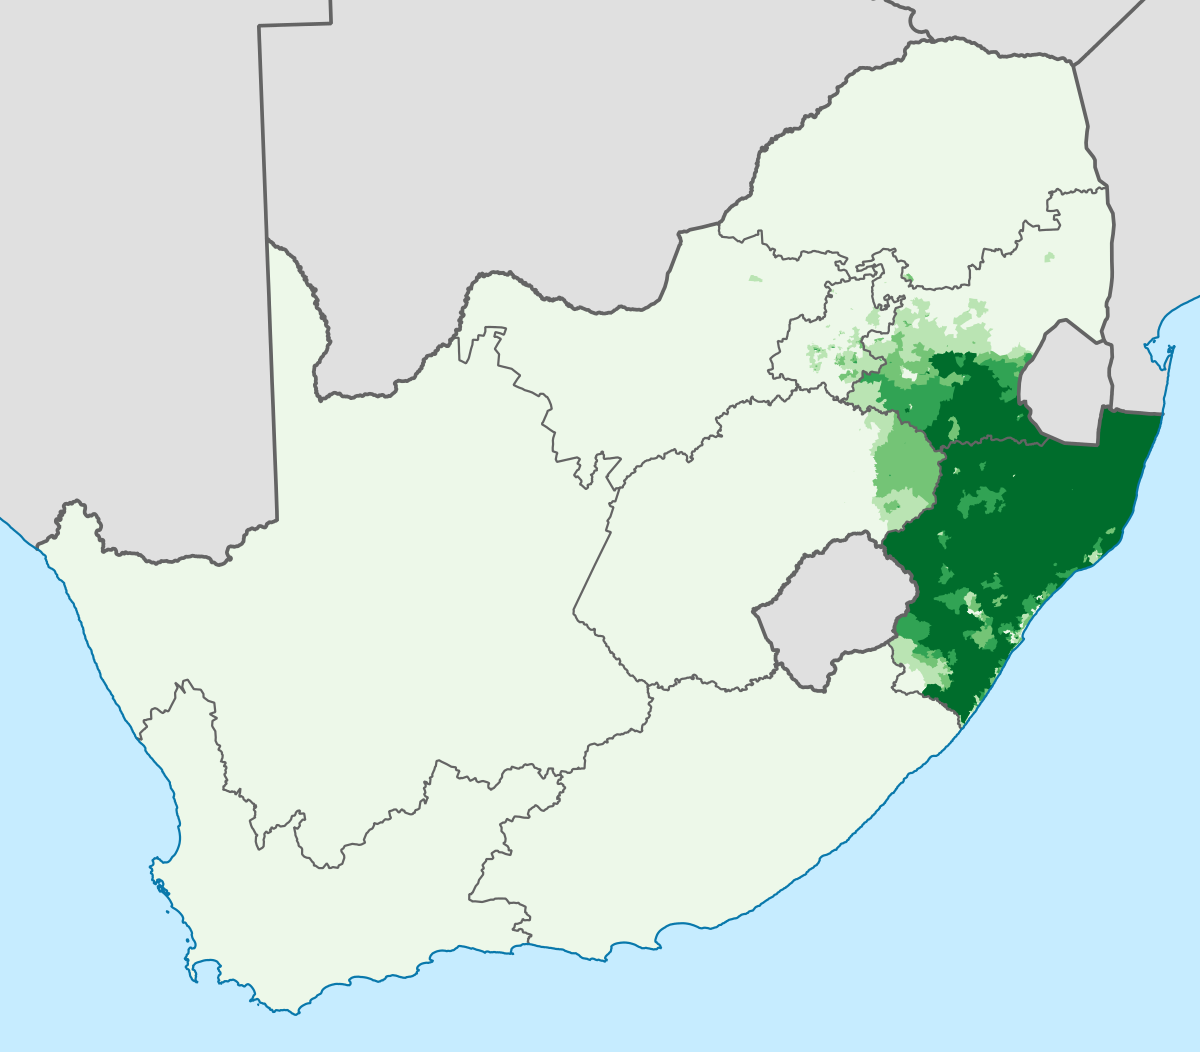 Zulu speaking countries and territories